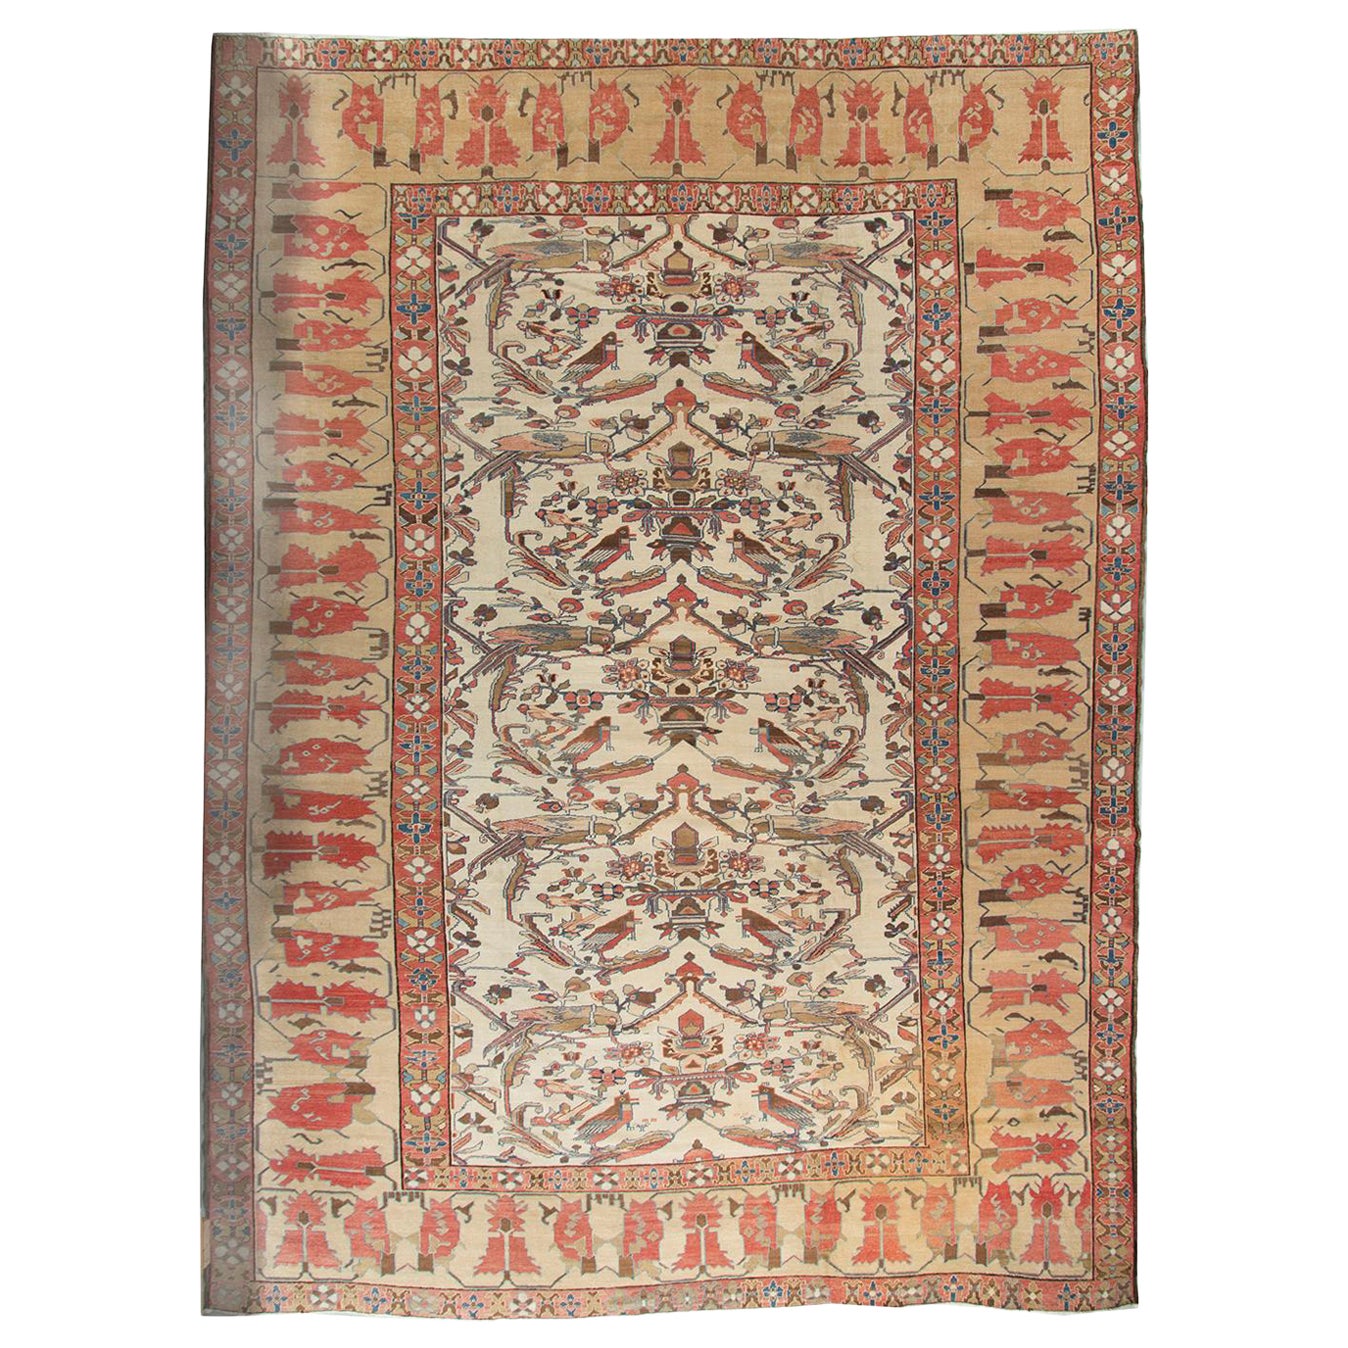 Antique Persian Bakshaish Rug, 13' x 17'6